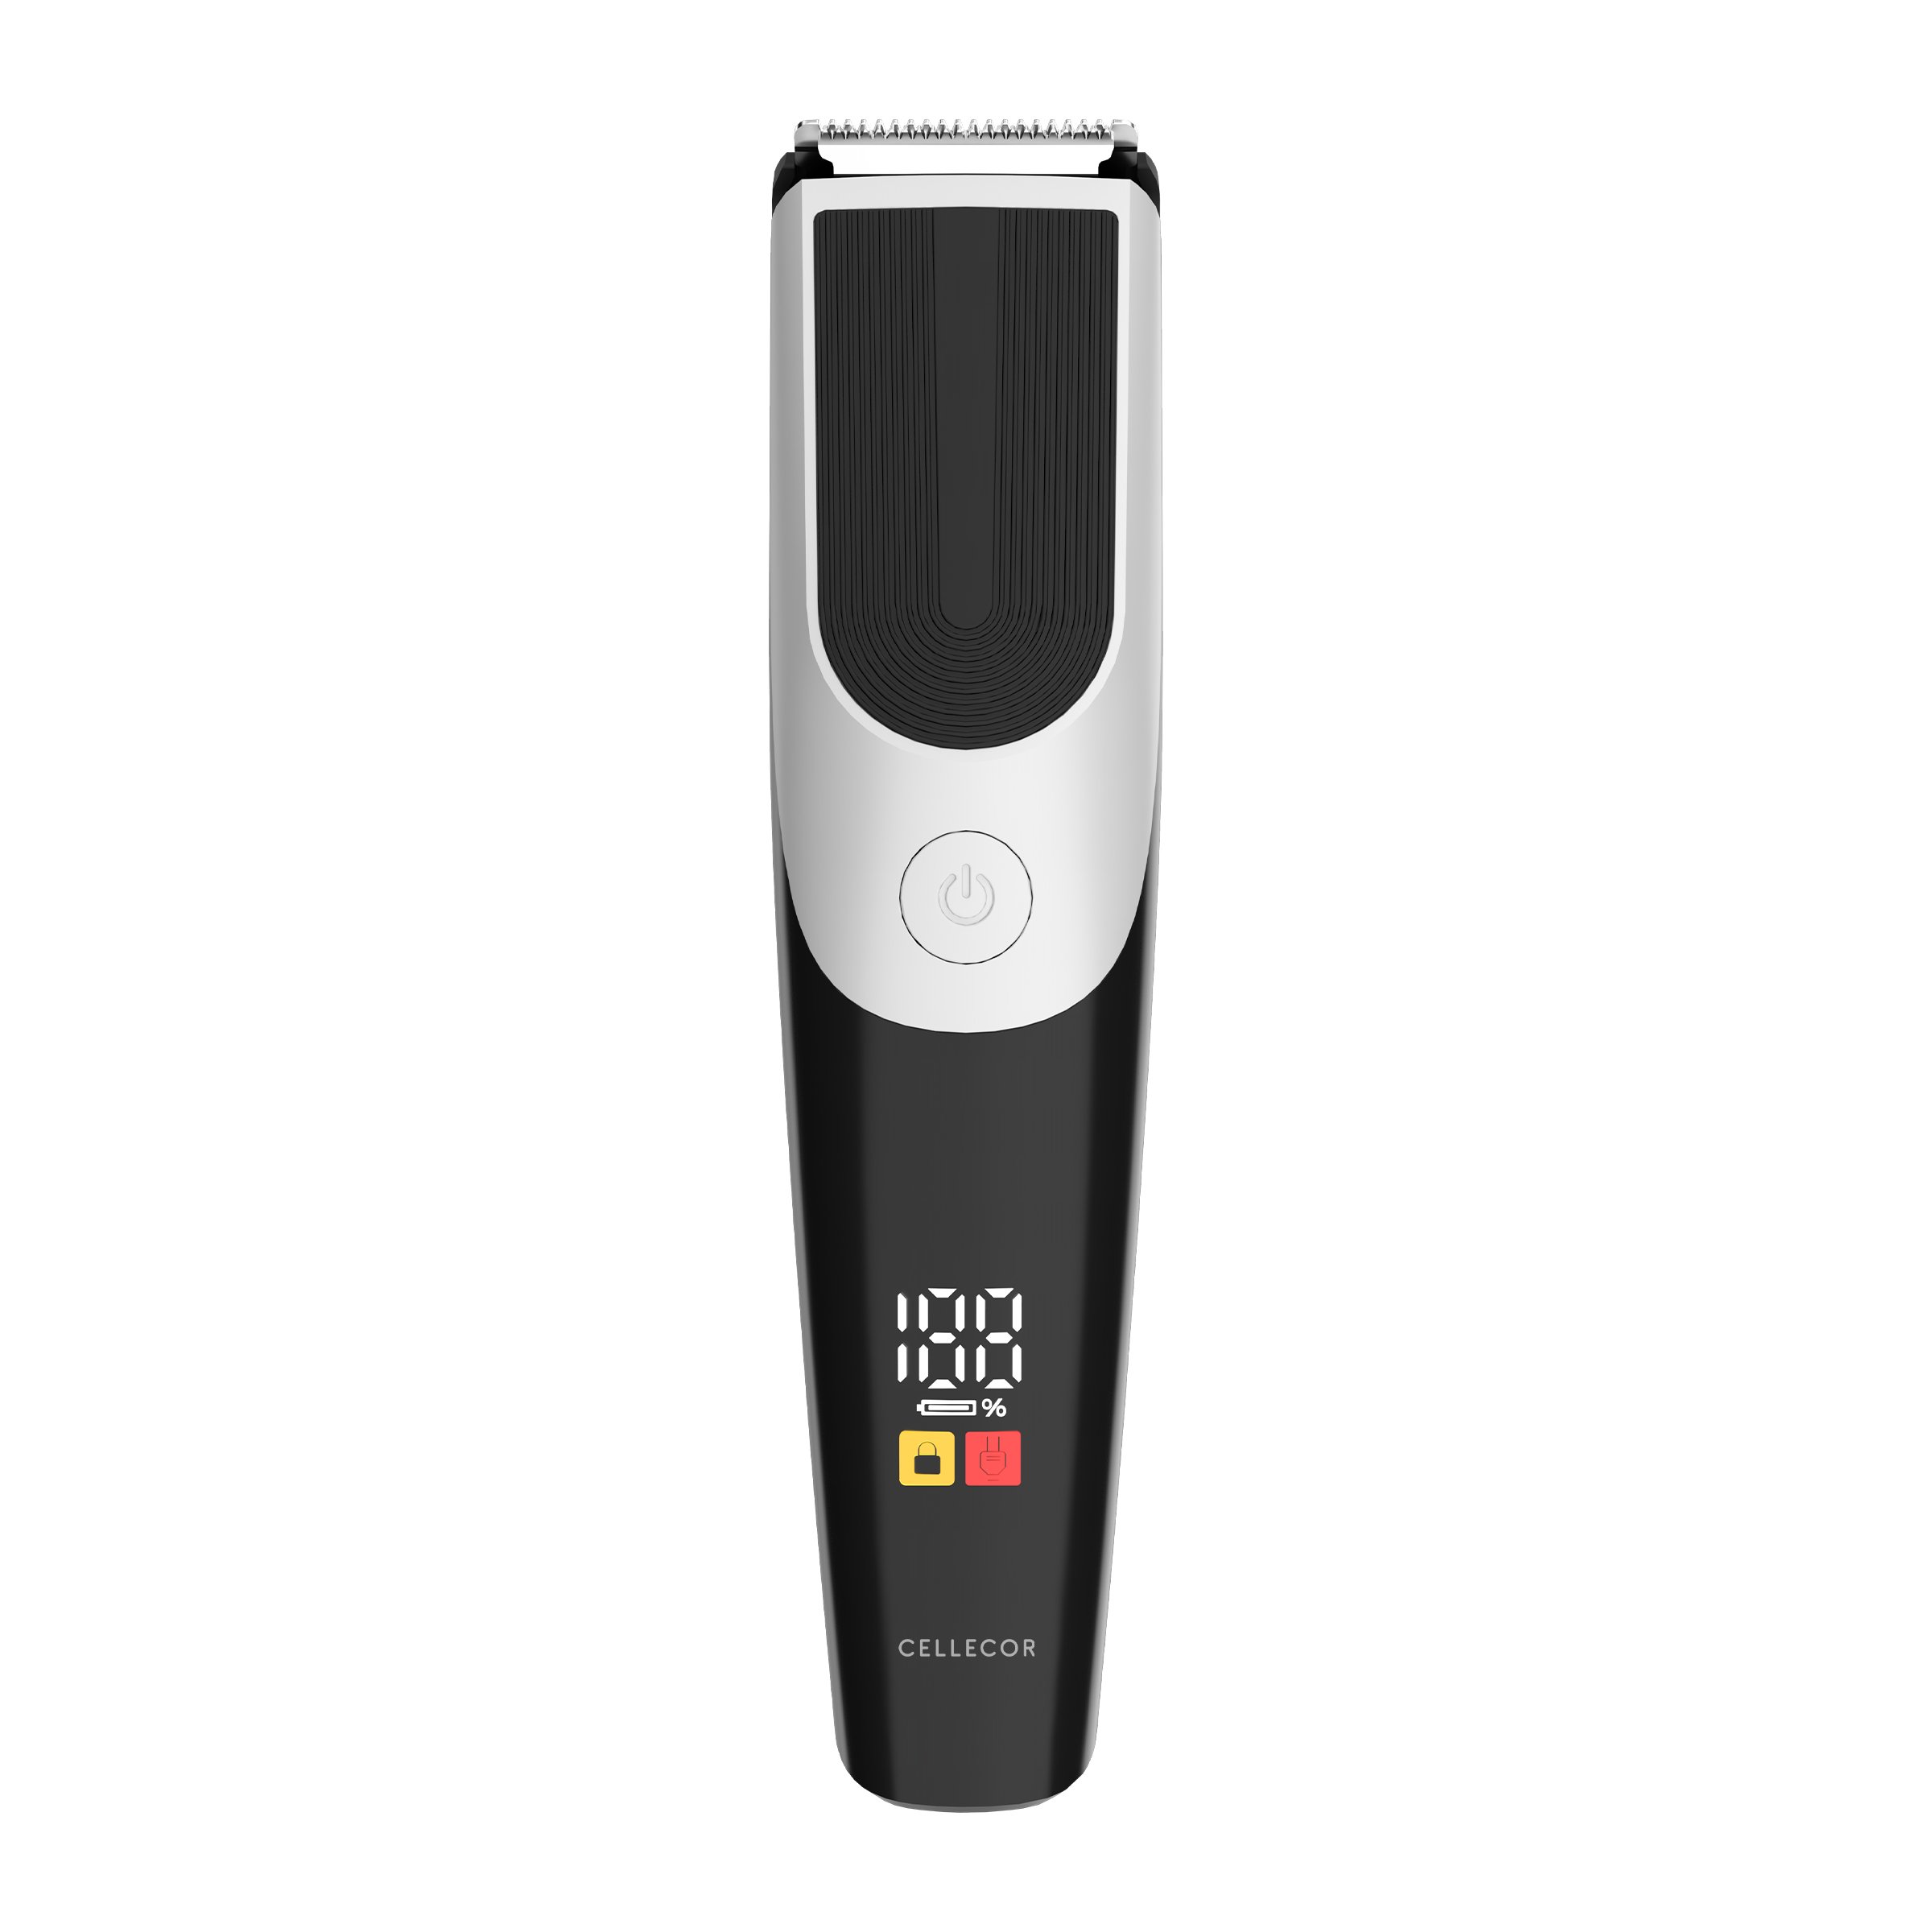 CELLECOR Hair Trimmer- ACUTE 800mAh li-ion | type c charging| 120min runtime| 7 length settings| self sharpening blades| washable head| digital battery display